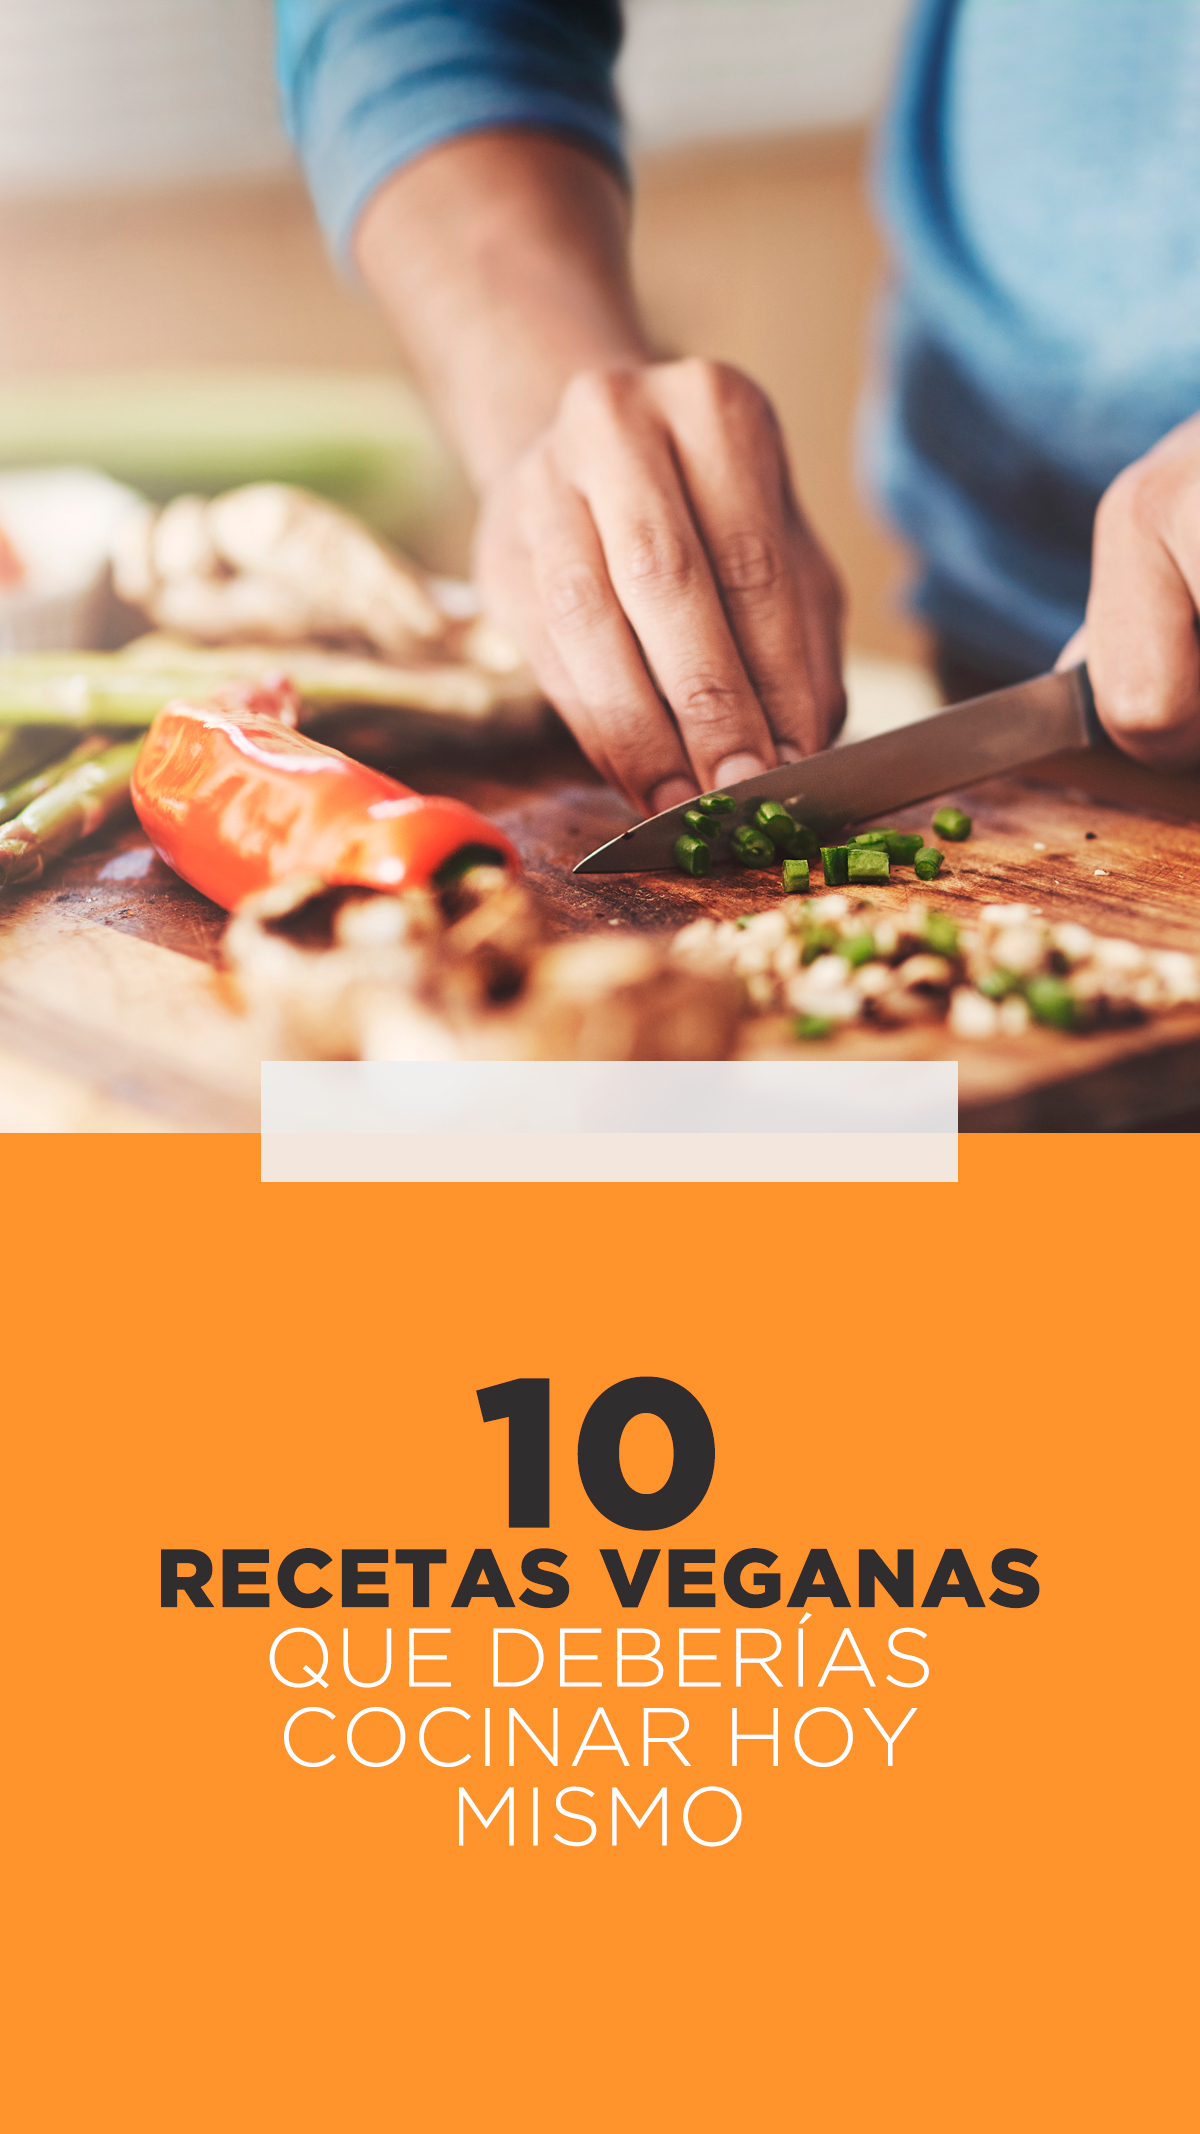 10 recetas veganas que deberías cocinar hoy mismo